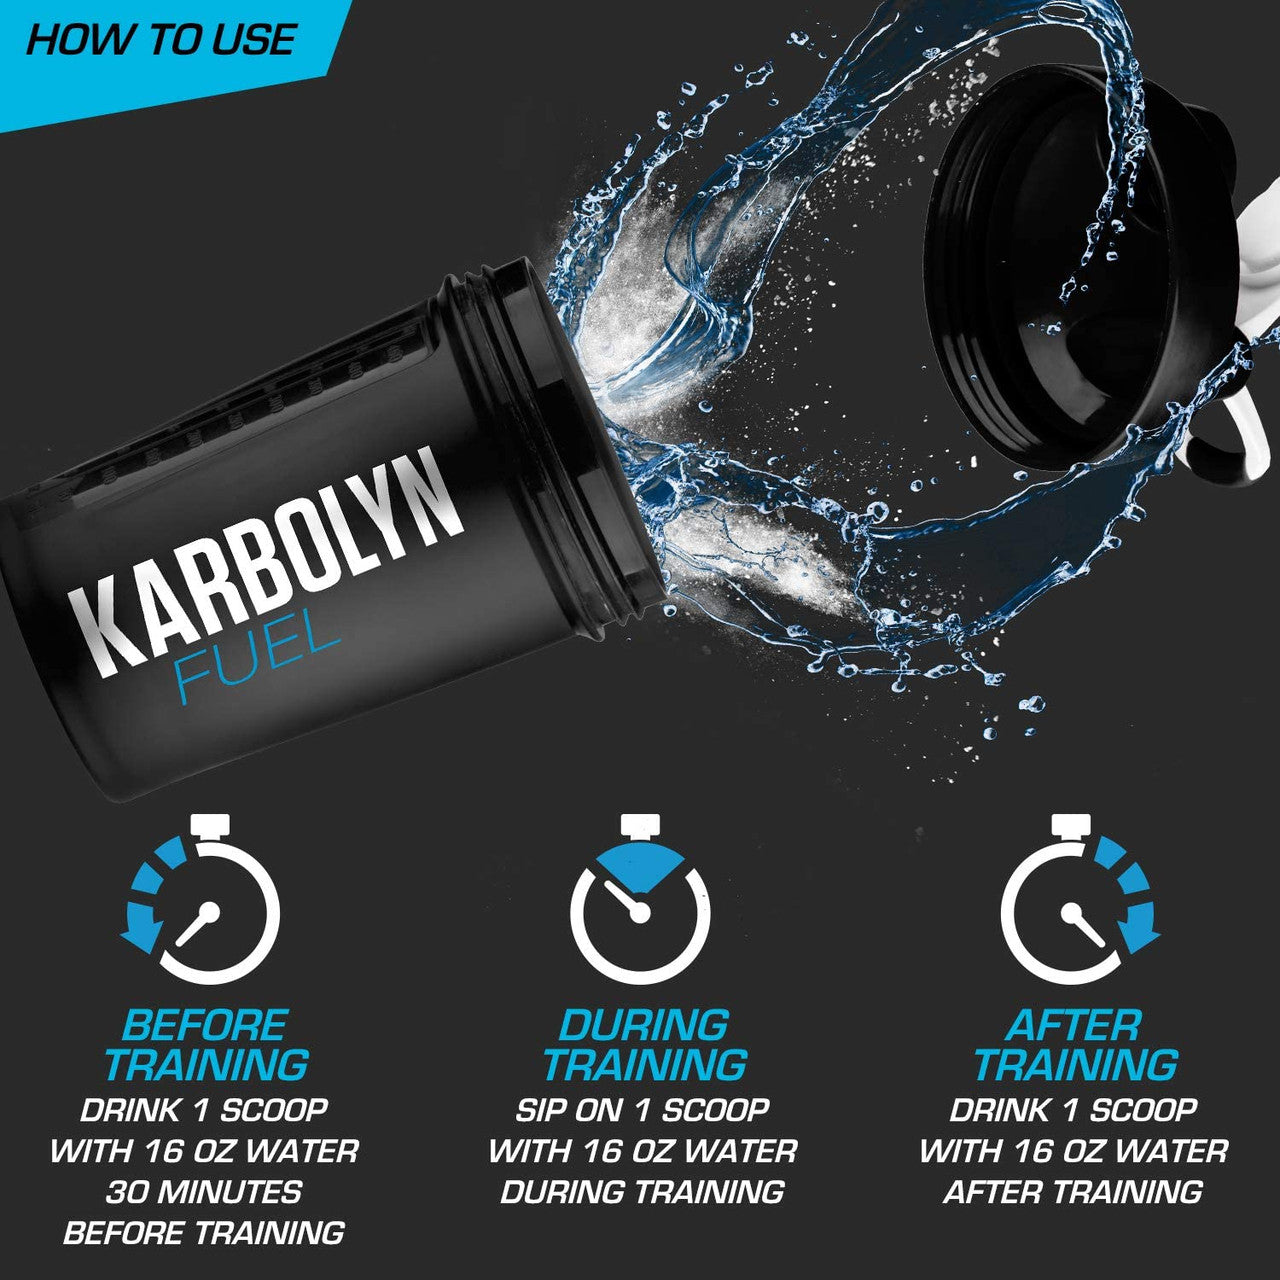 EFX Sports Karbolyn Fuel mixture highlight